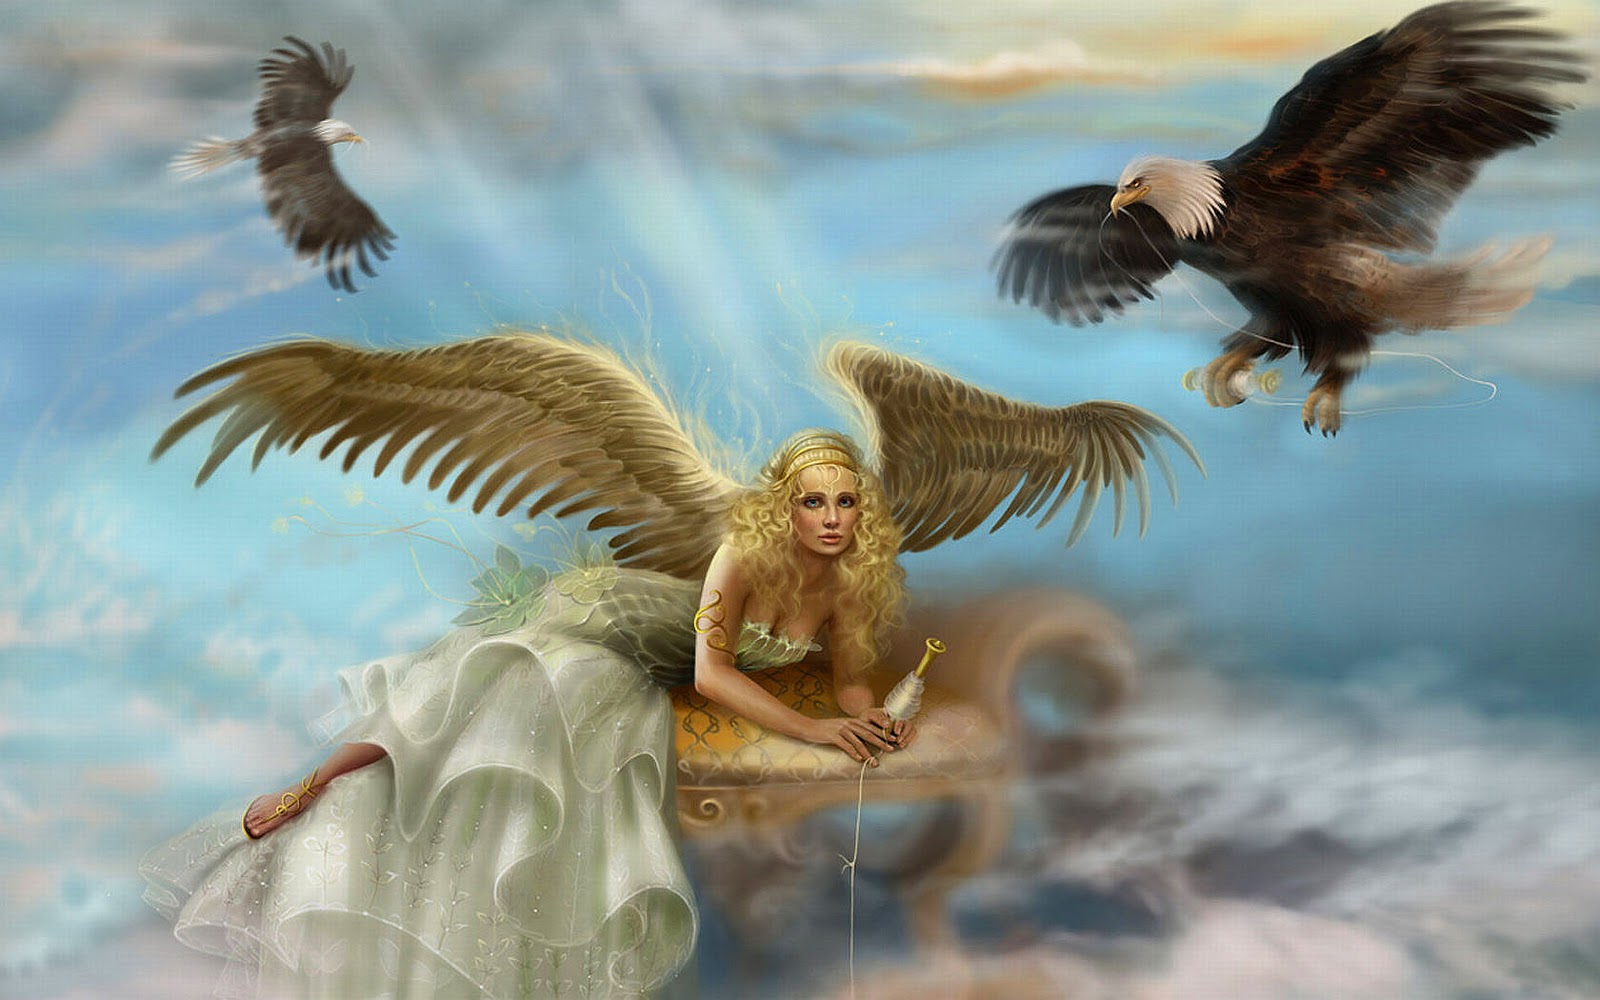 engel tapete,engel,mythologie,übernatürliche kreatur,flügel,himmel